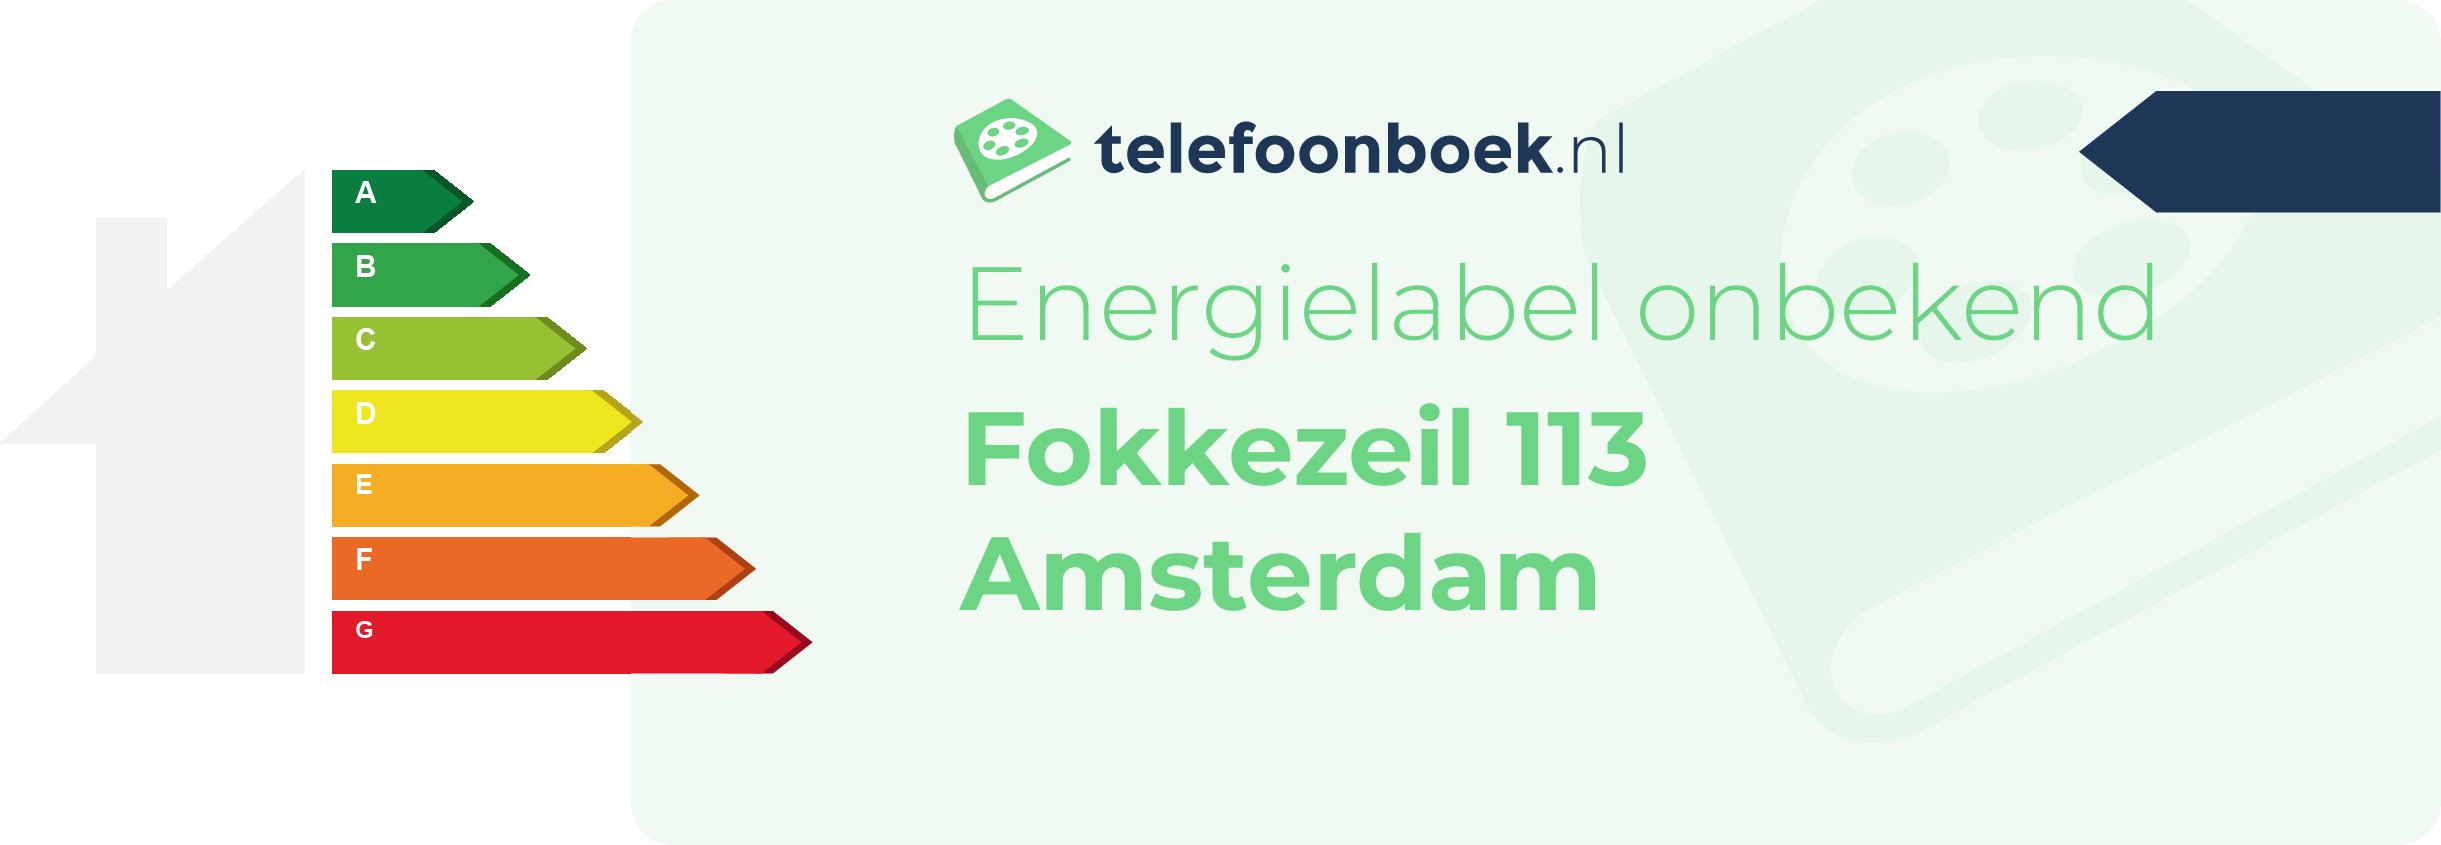 Energielabel Fokkezeil 113 Amsterdam